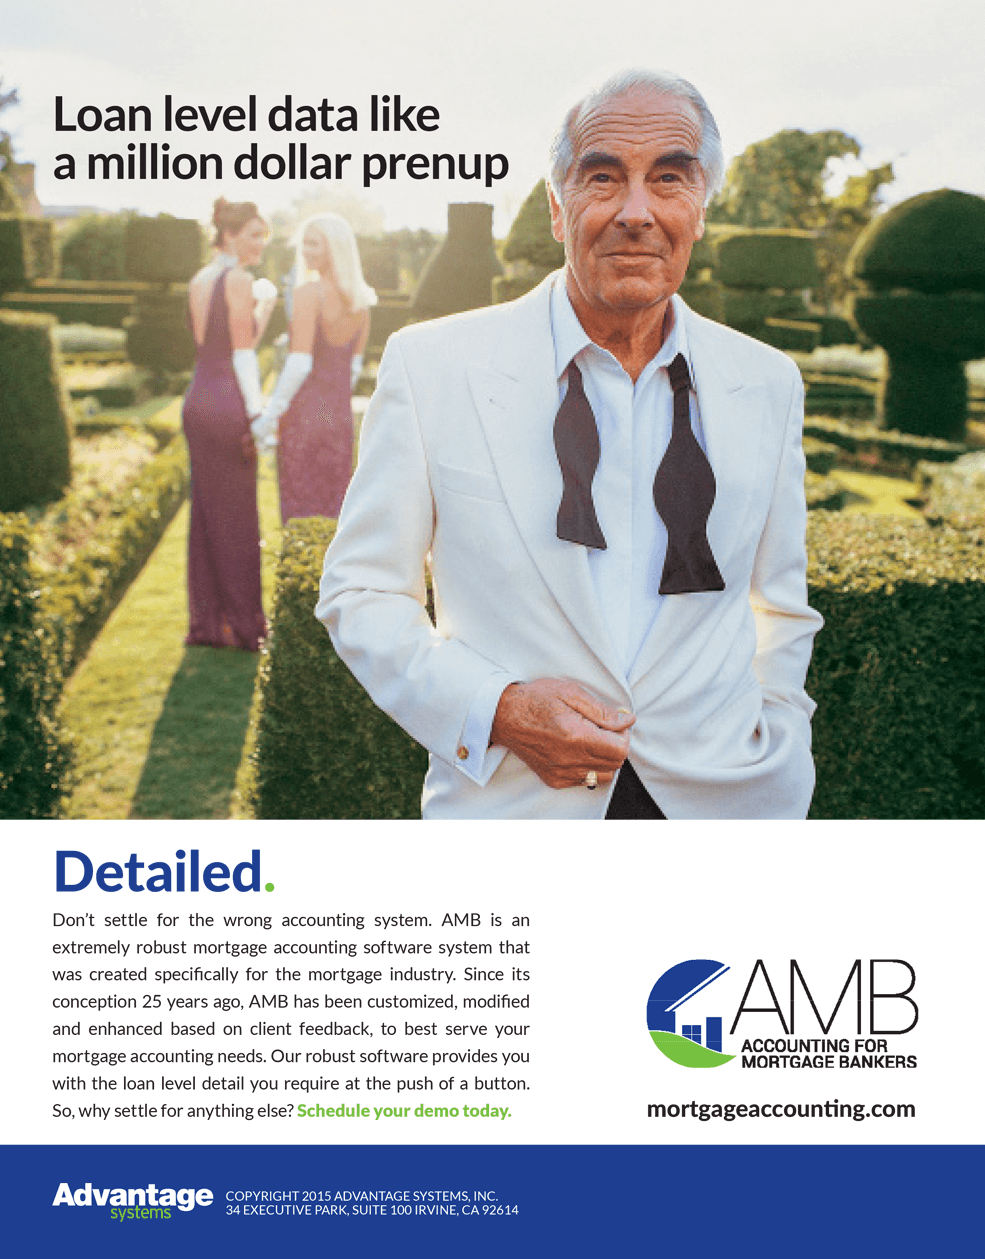 AMB Detailed Ad - Loan Level Data Like a Million Dollar Prenup